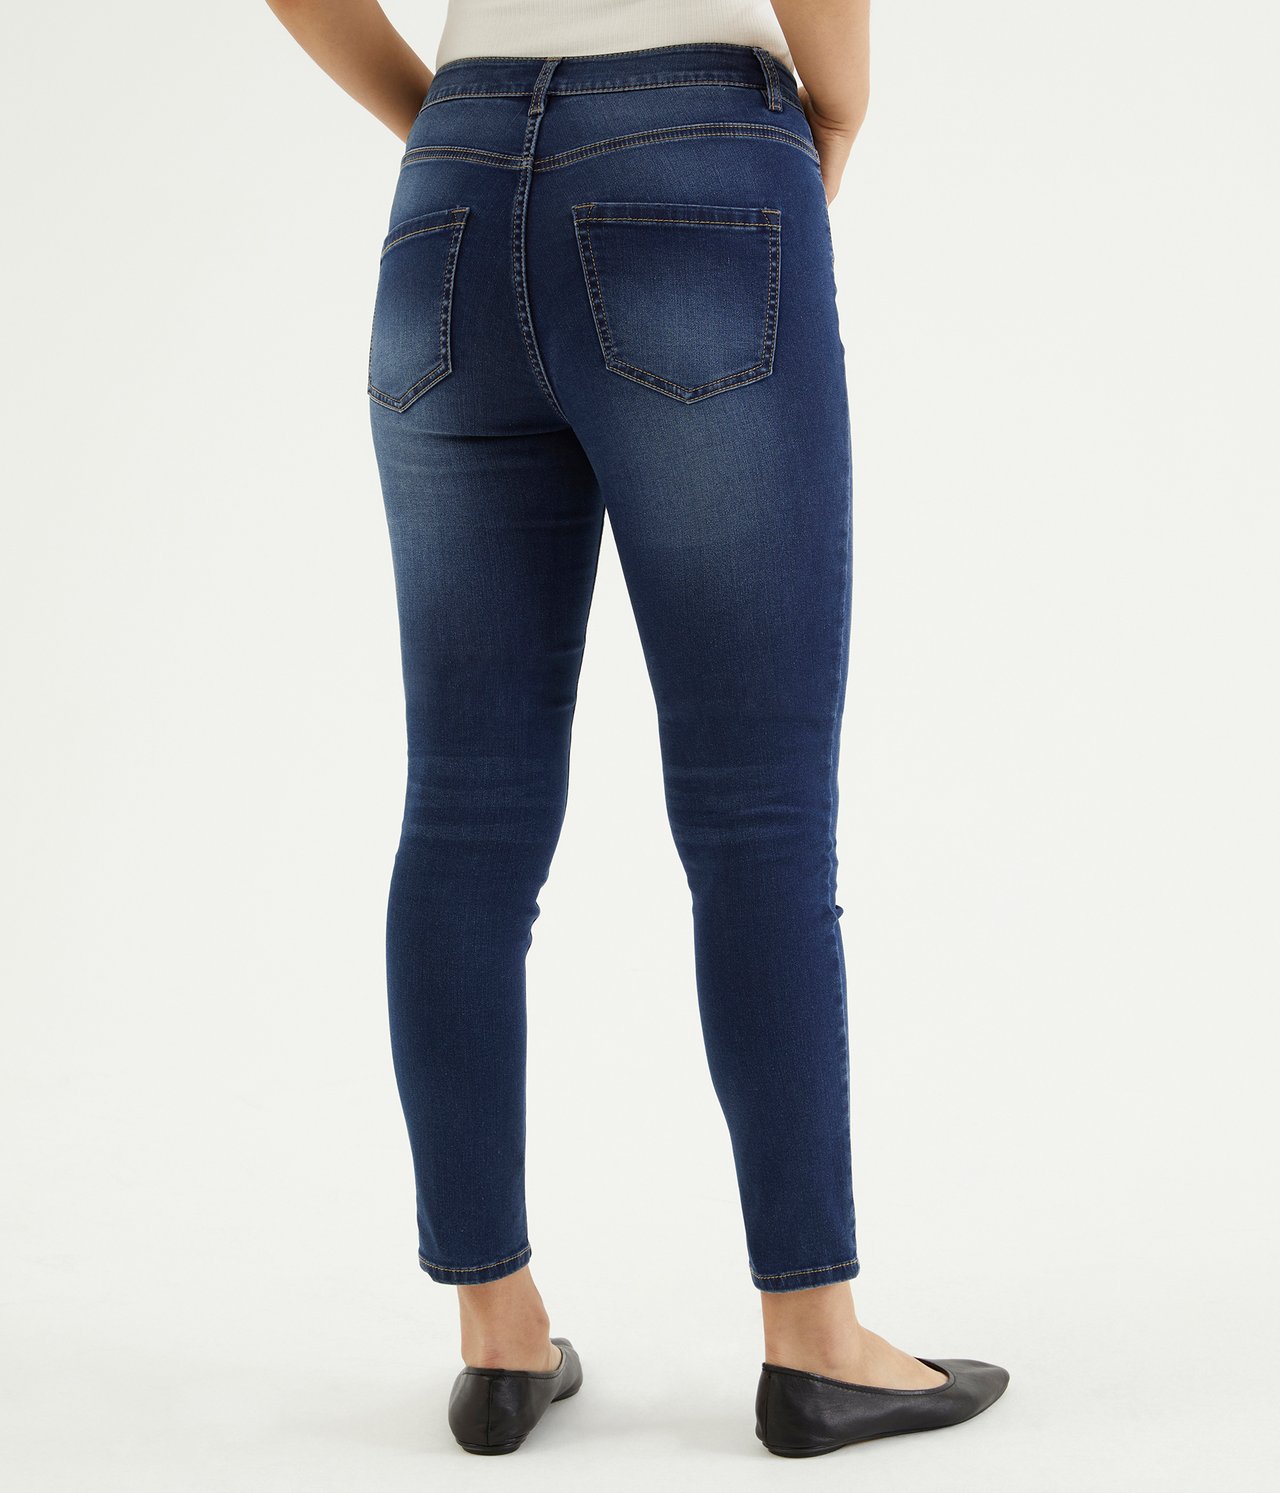 Super slim jeans short leg - Mörk denim - 4